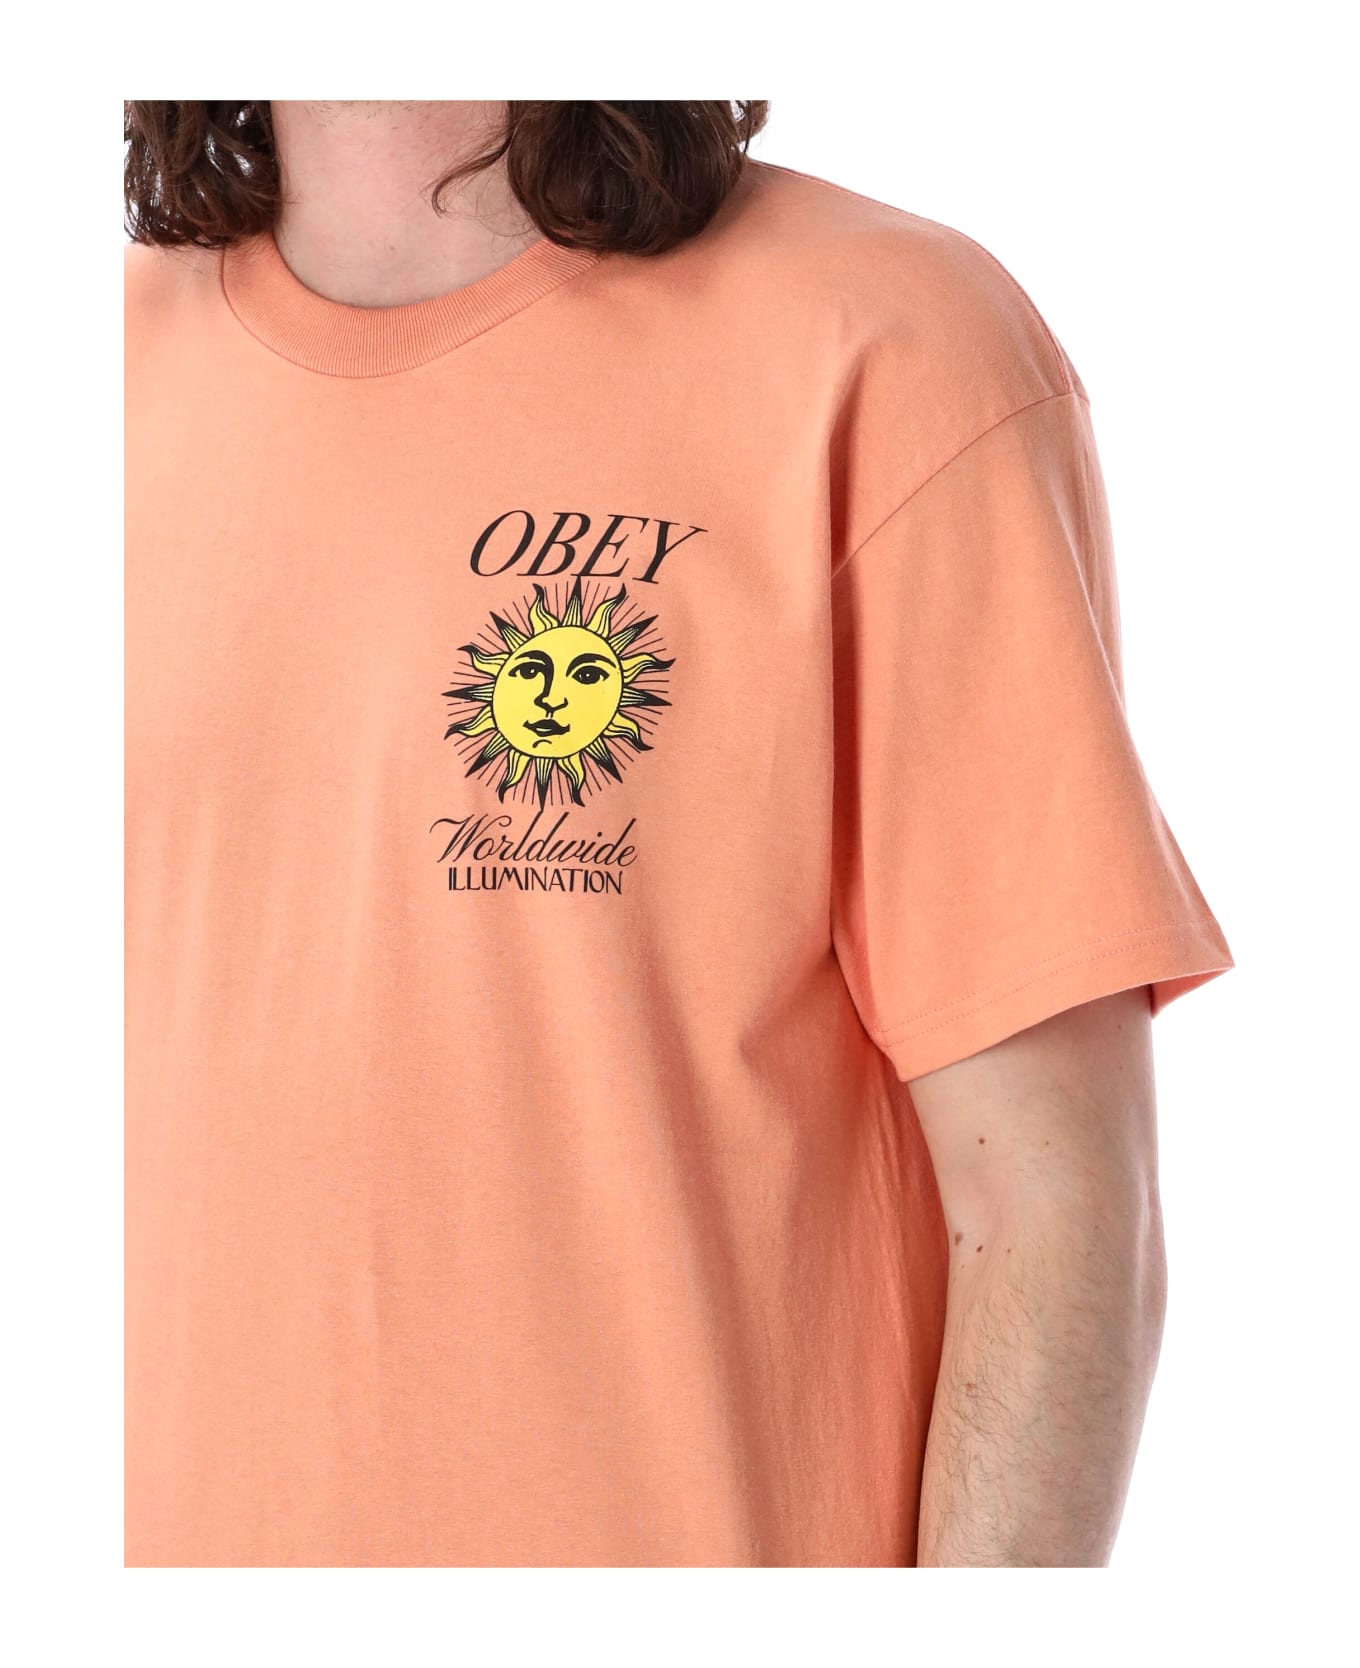 Obey Illumination Classic T-shirt - CITRUS シャツ